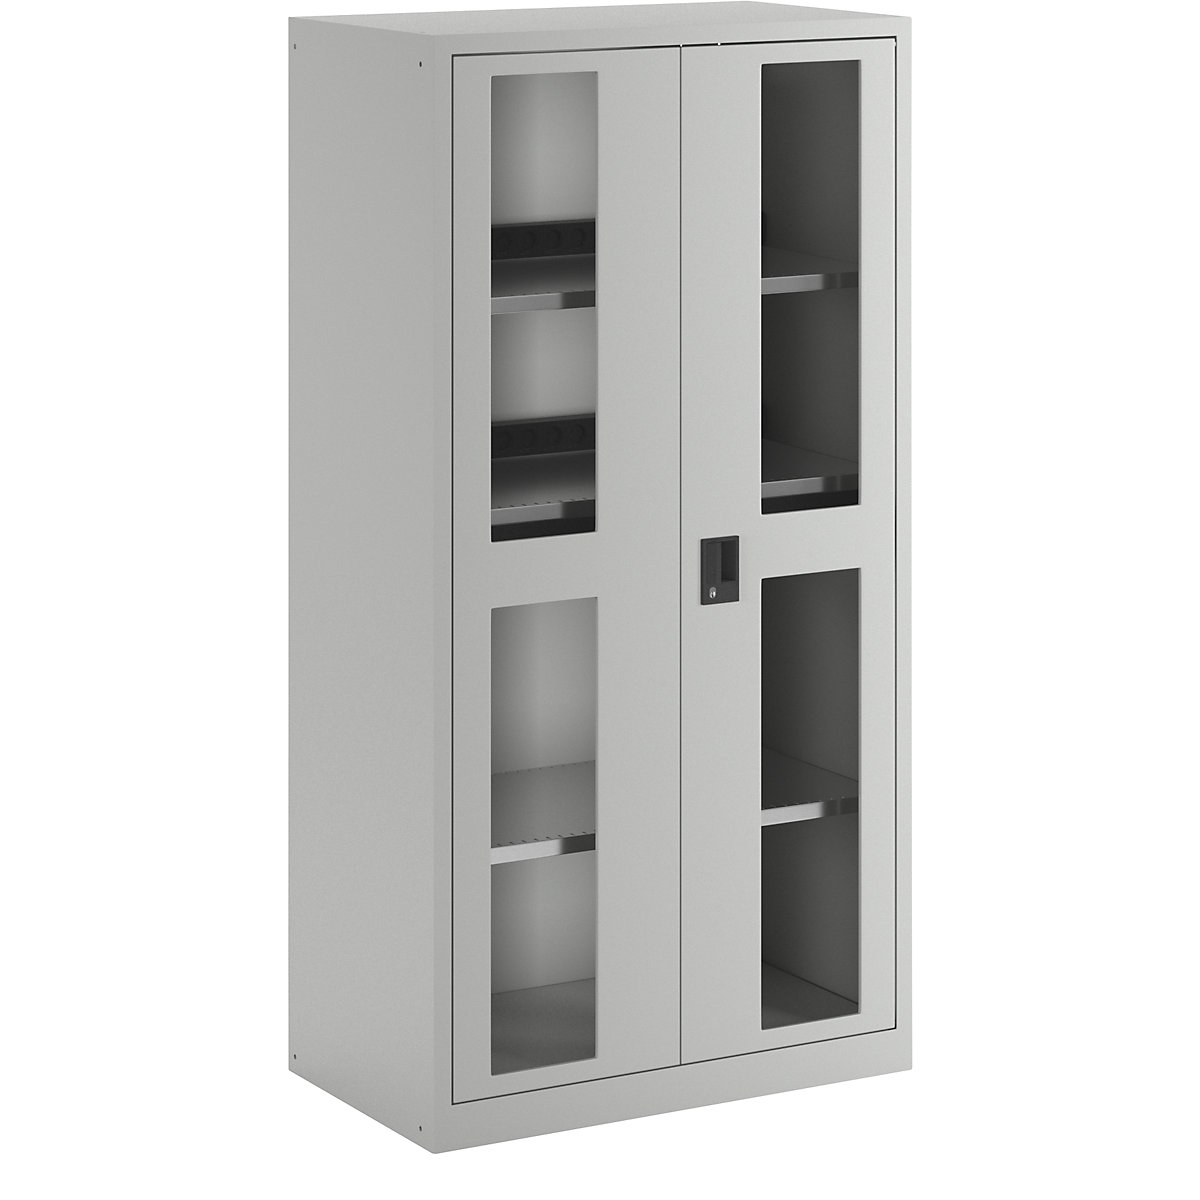 Akku-Ladeschrank LISTA, 3 Fachböden, 2 Schubladen, Sichtfenstertüren, grau-16